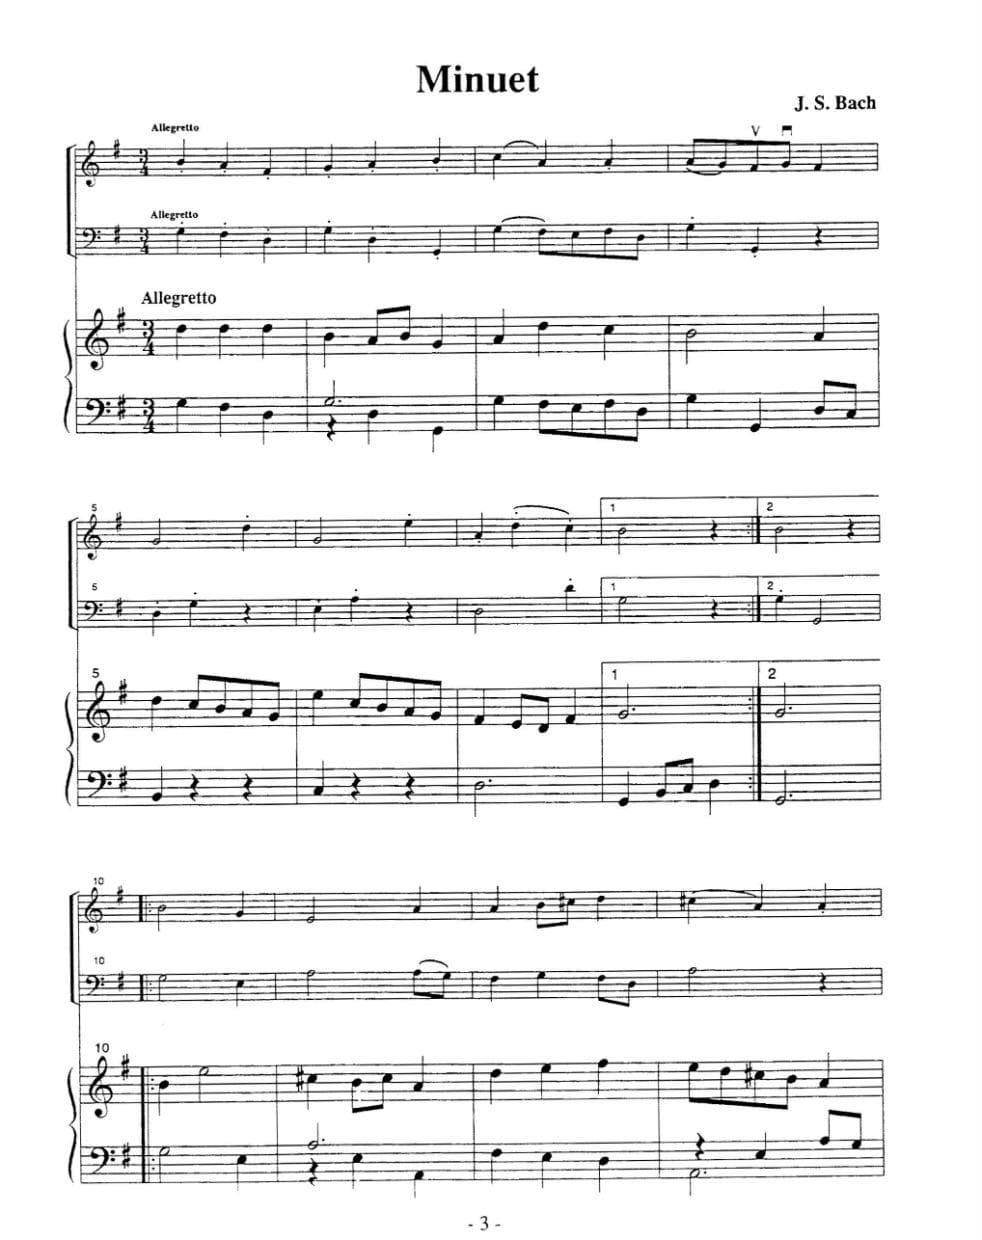 Twenty Triolets, Volume 1 - Violin, Cello, and Piano - arranged by Joseph McSpadden - Mariposa Music Inc